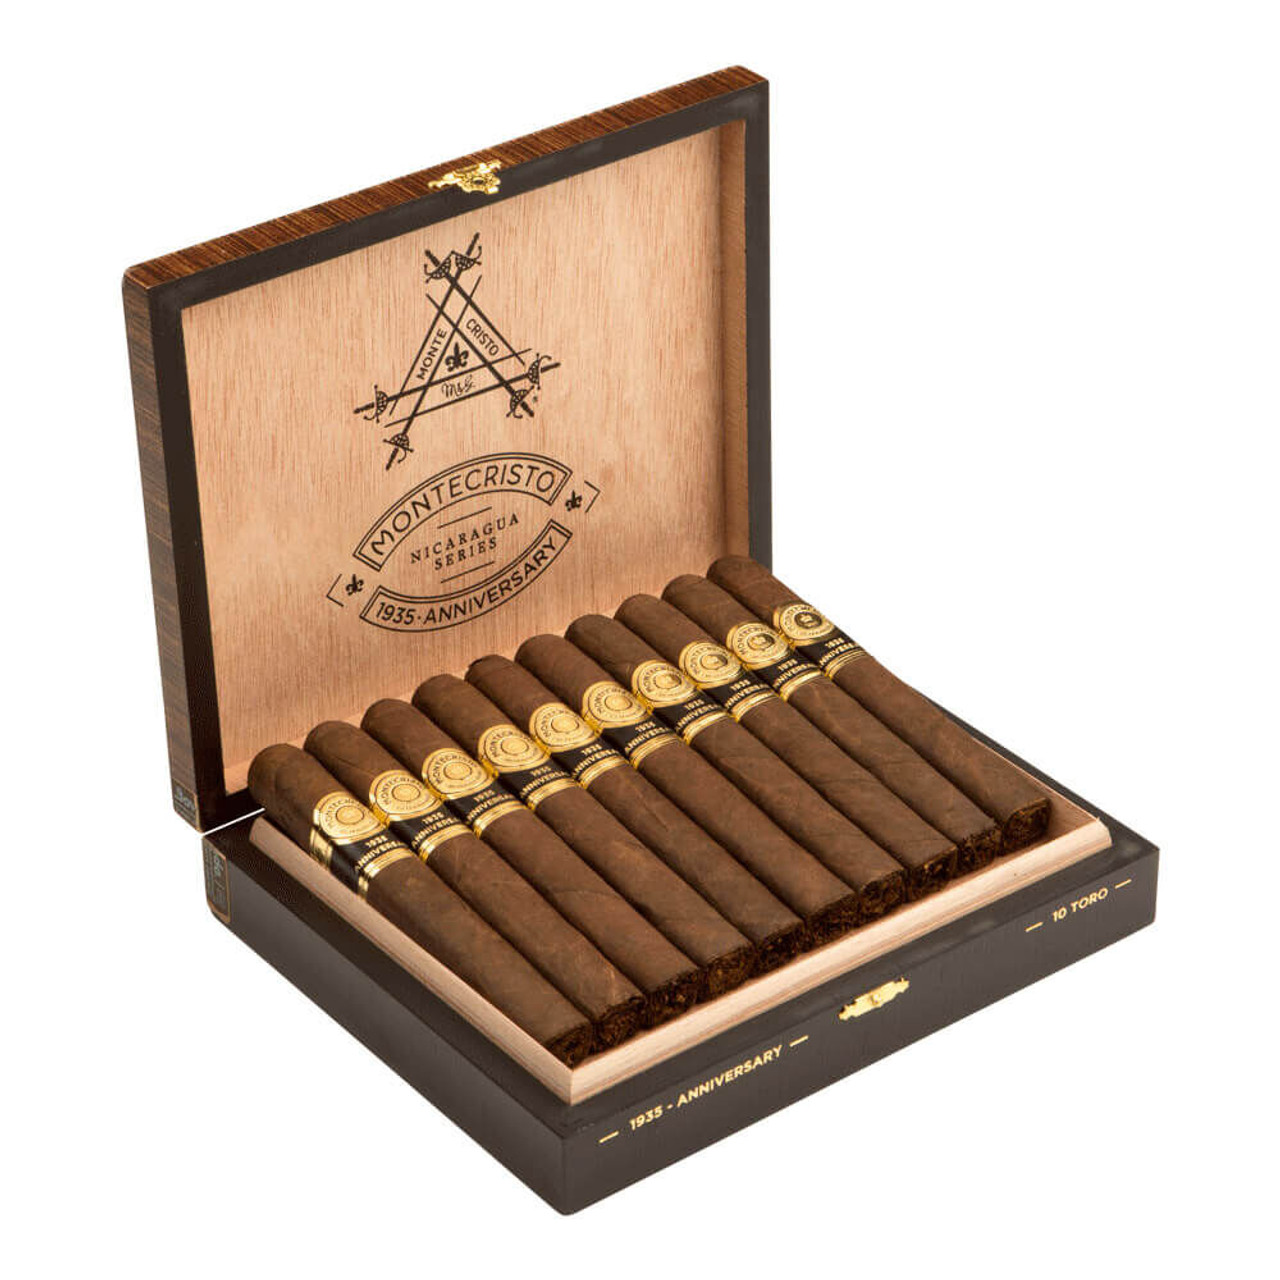 Montecristo 1935 Anniversary Nicaragua Toro Cigars - 6.0 x 54 (Box of 10)